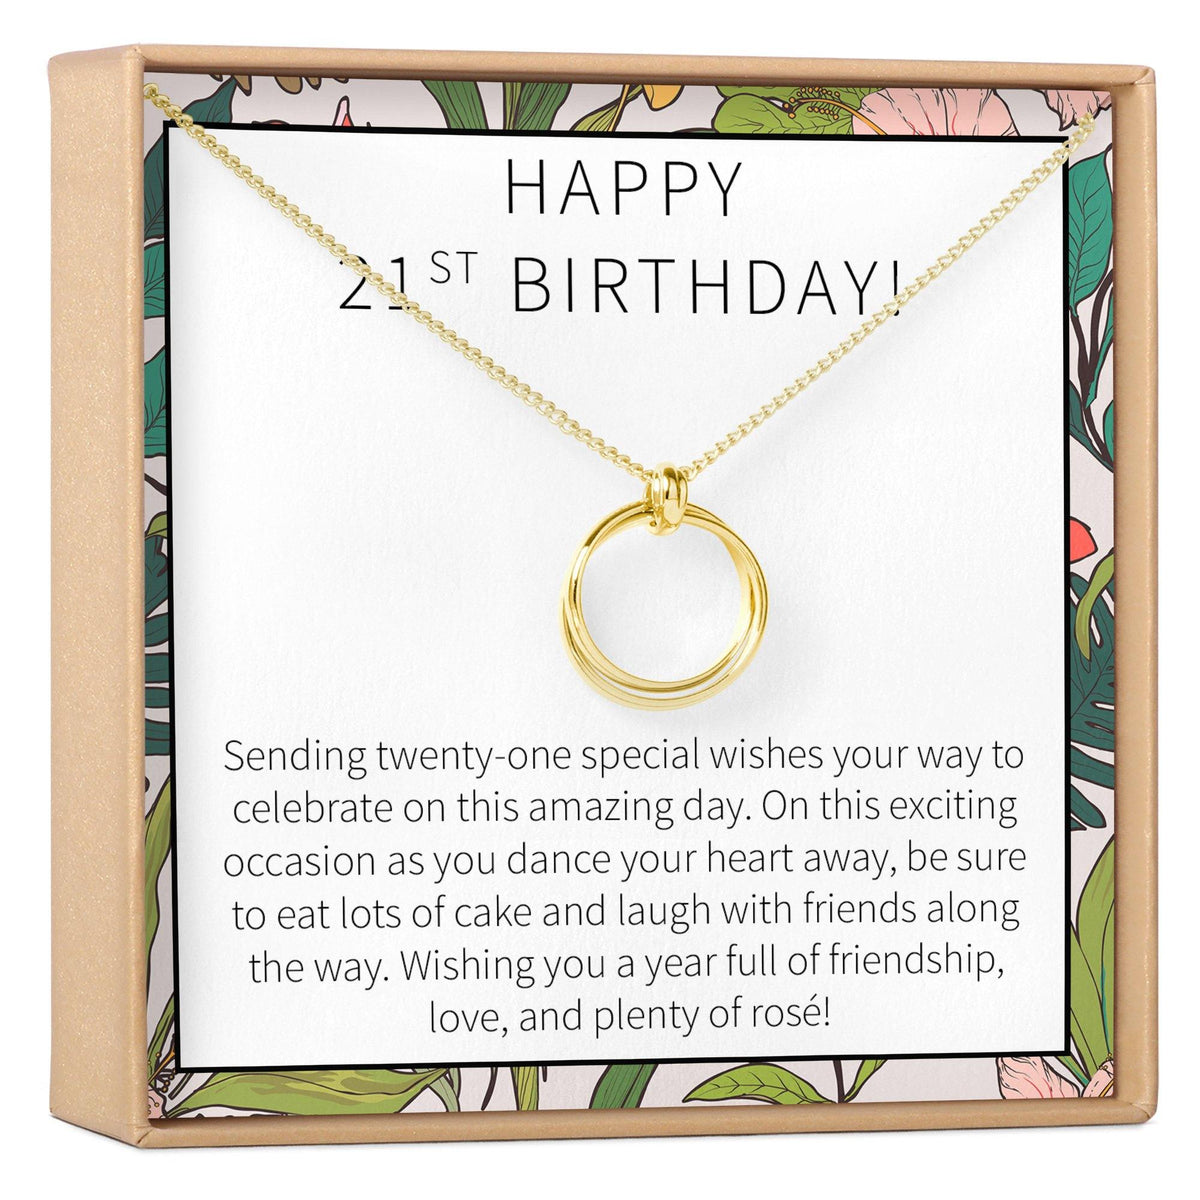 21st Birthday Necklace - Dear Ava